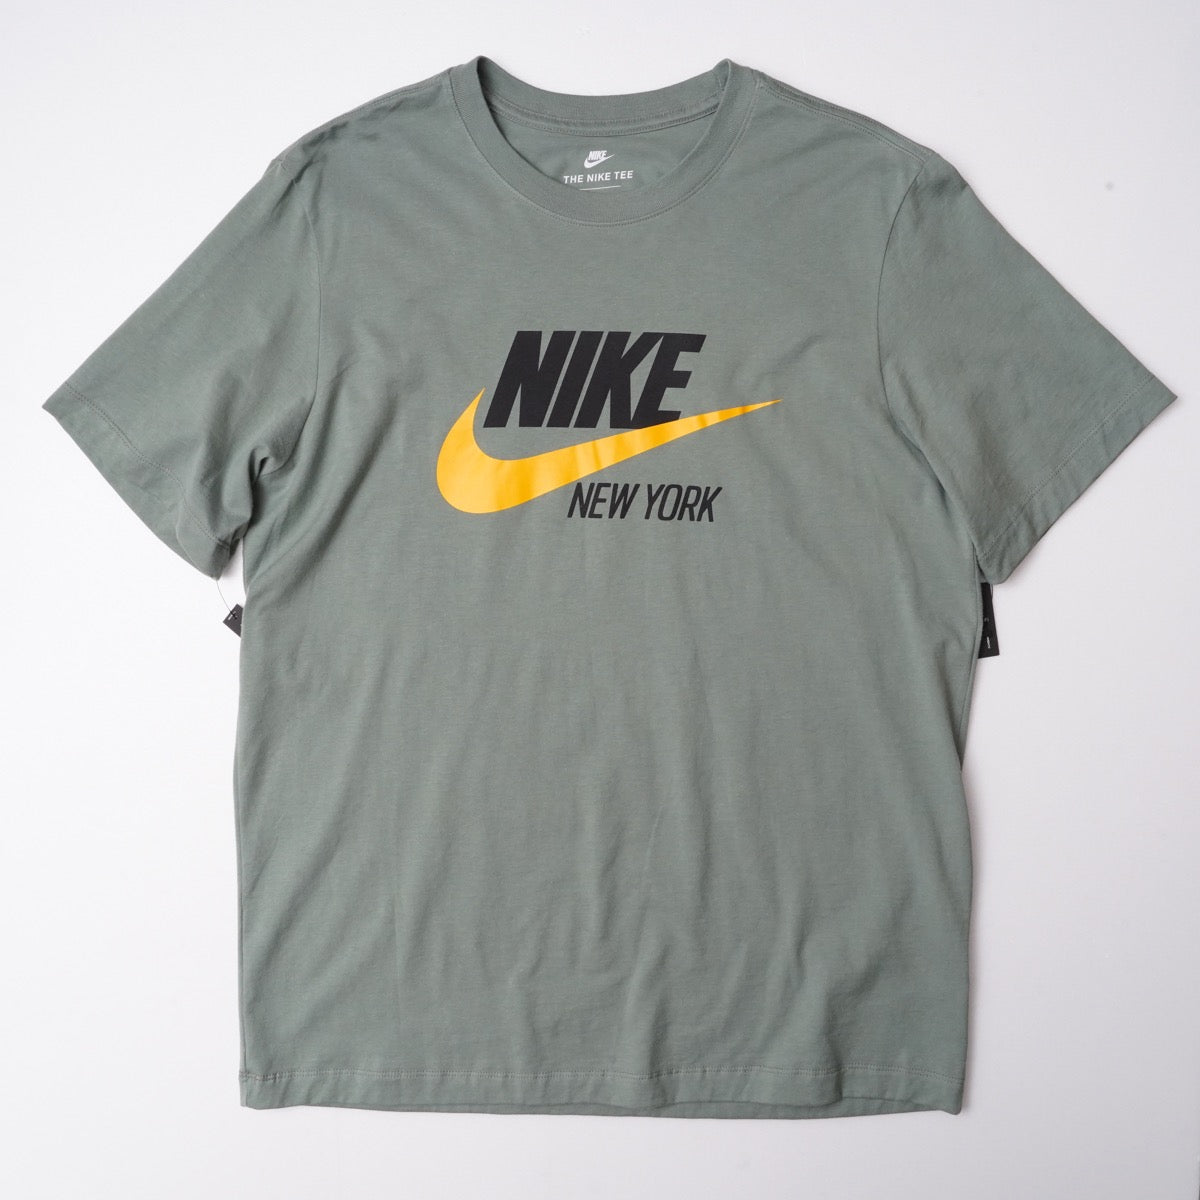 NIKE NEW YORK SWOOSH ナイキ ニューヨーク限定 グリーン スウッシュ Tシャツ GREEN TEE T-SHIRT